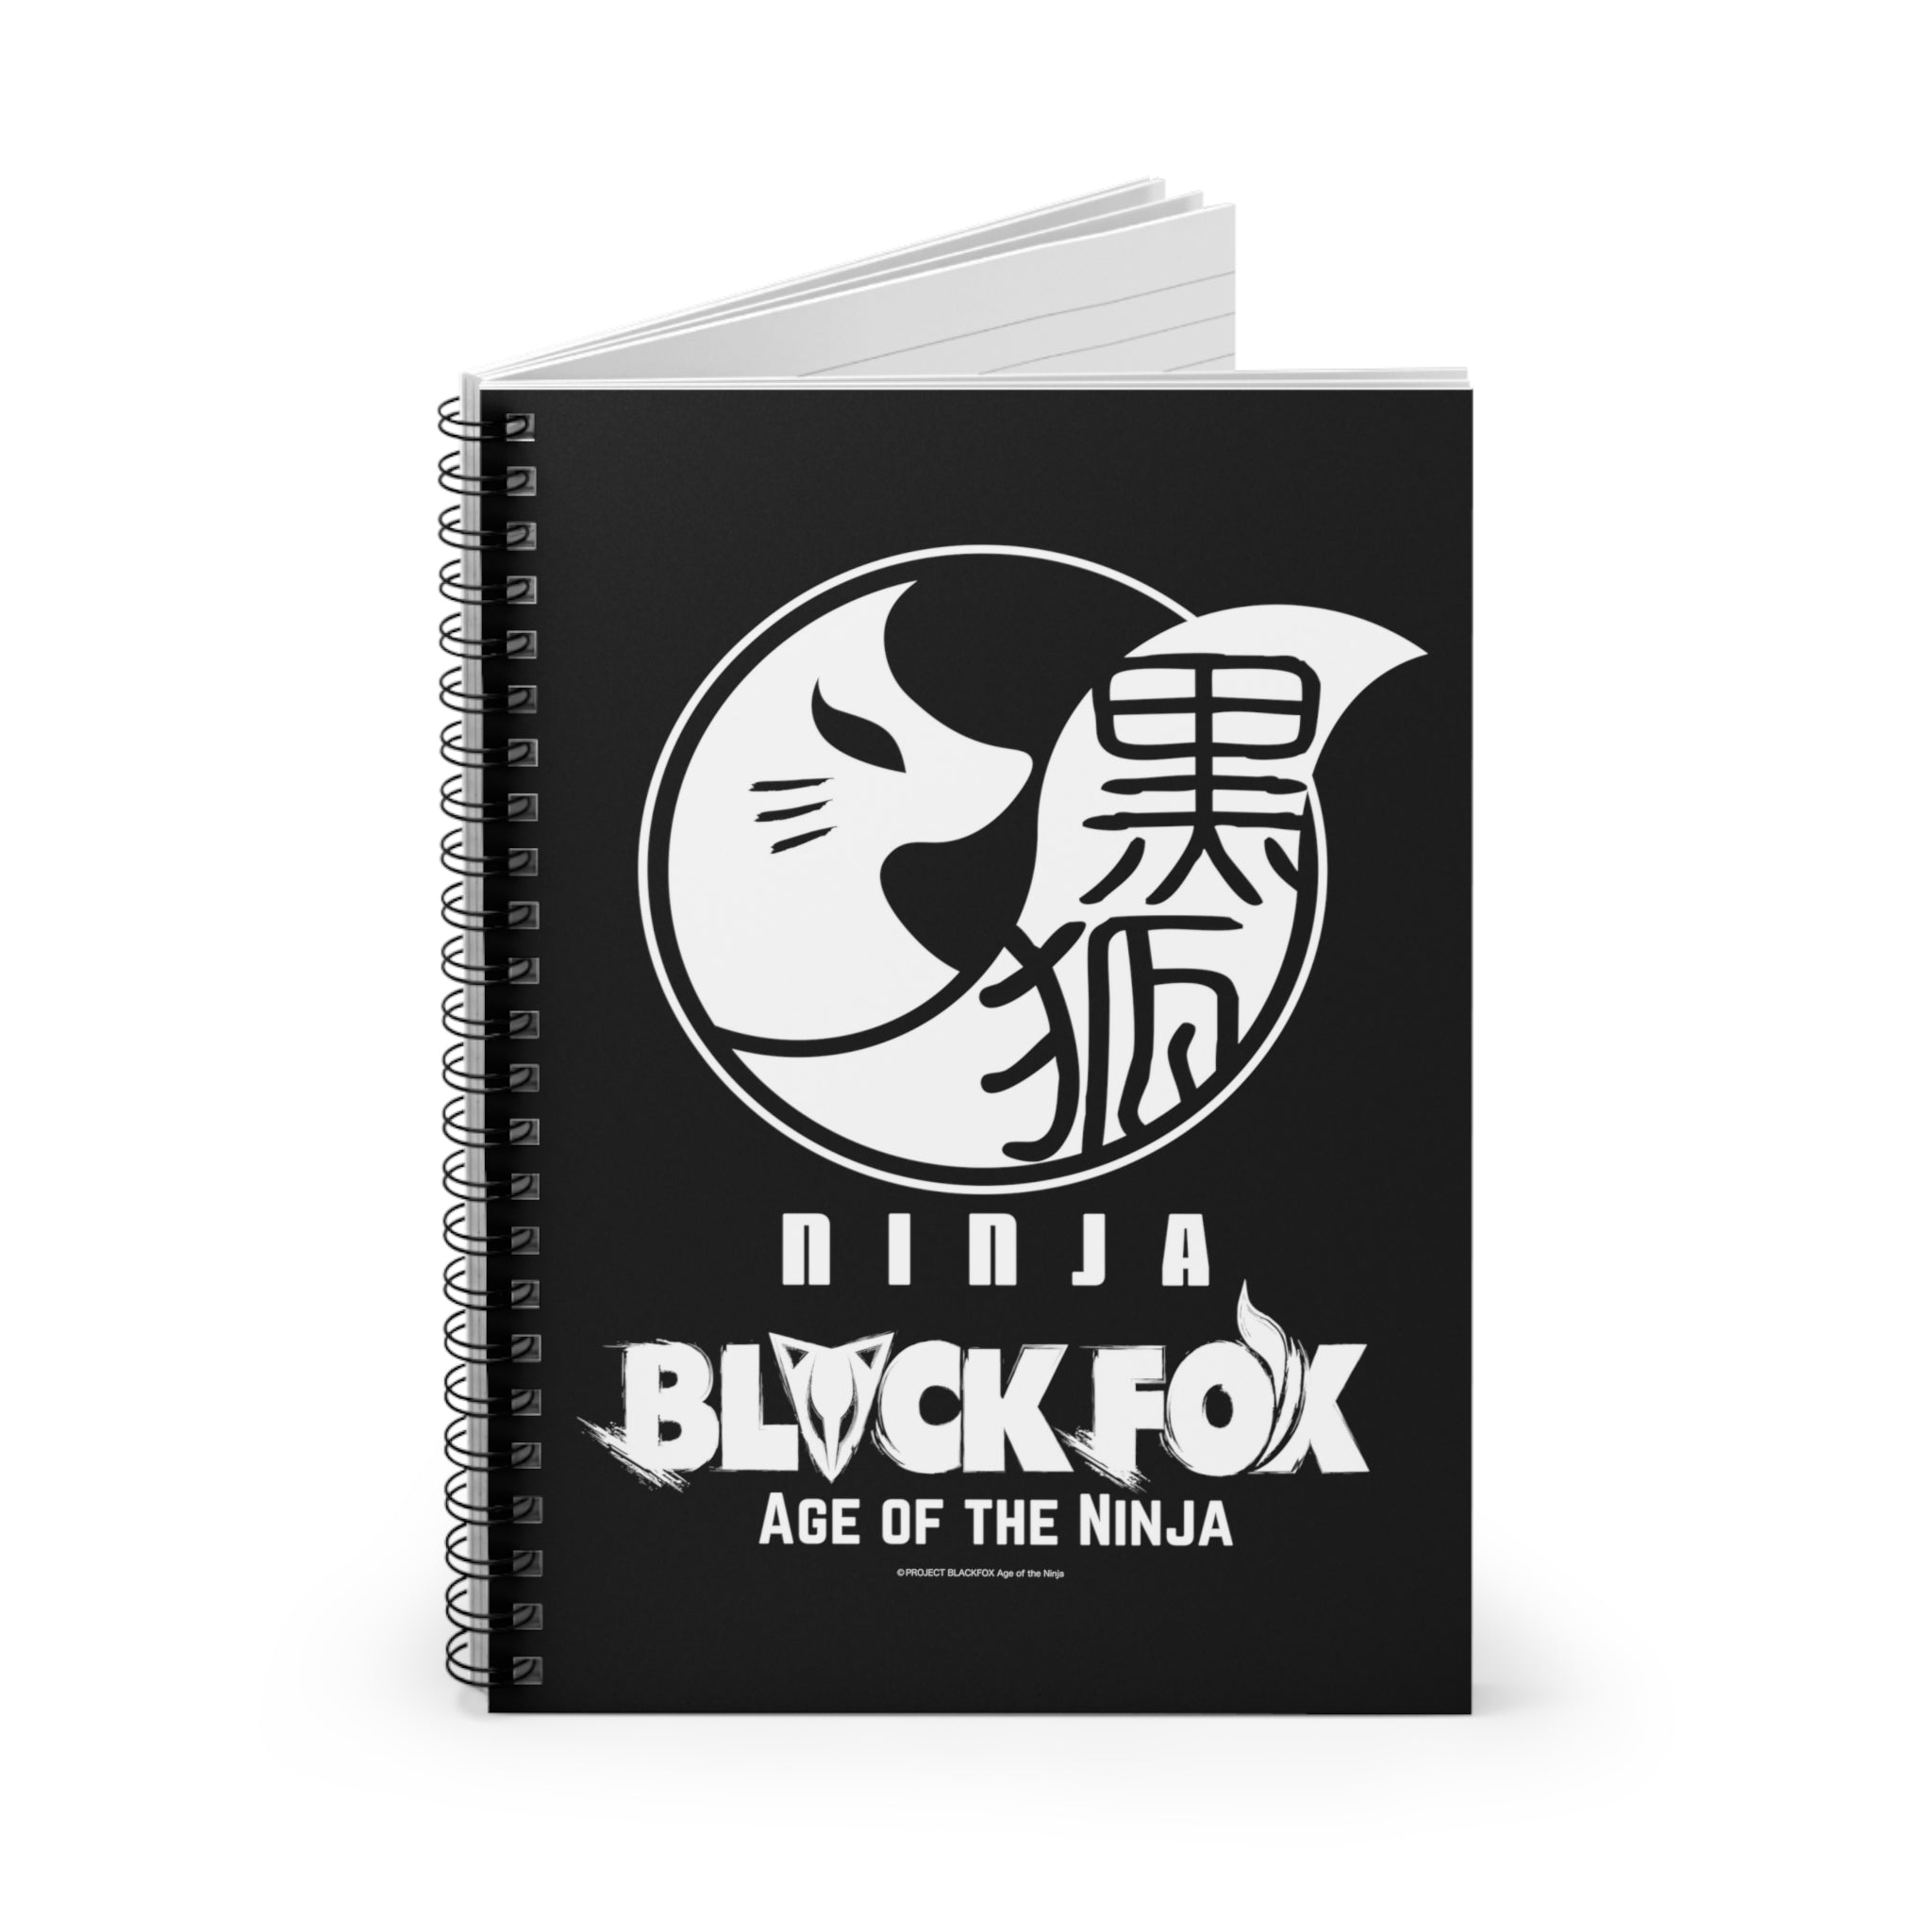 BLACKFOX LOGO Spiral Notebook - Ruled Line (Black)